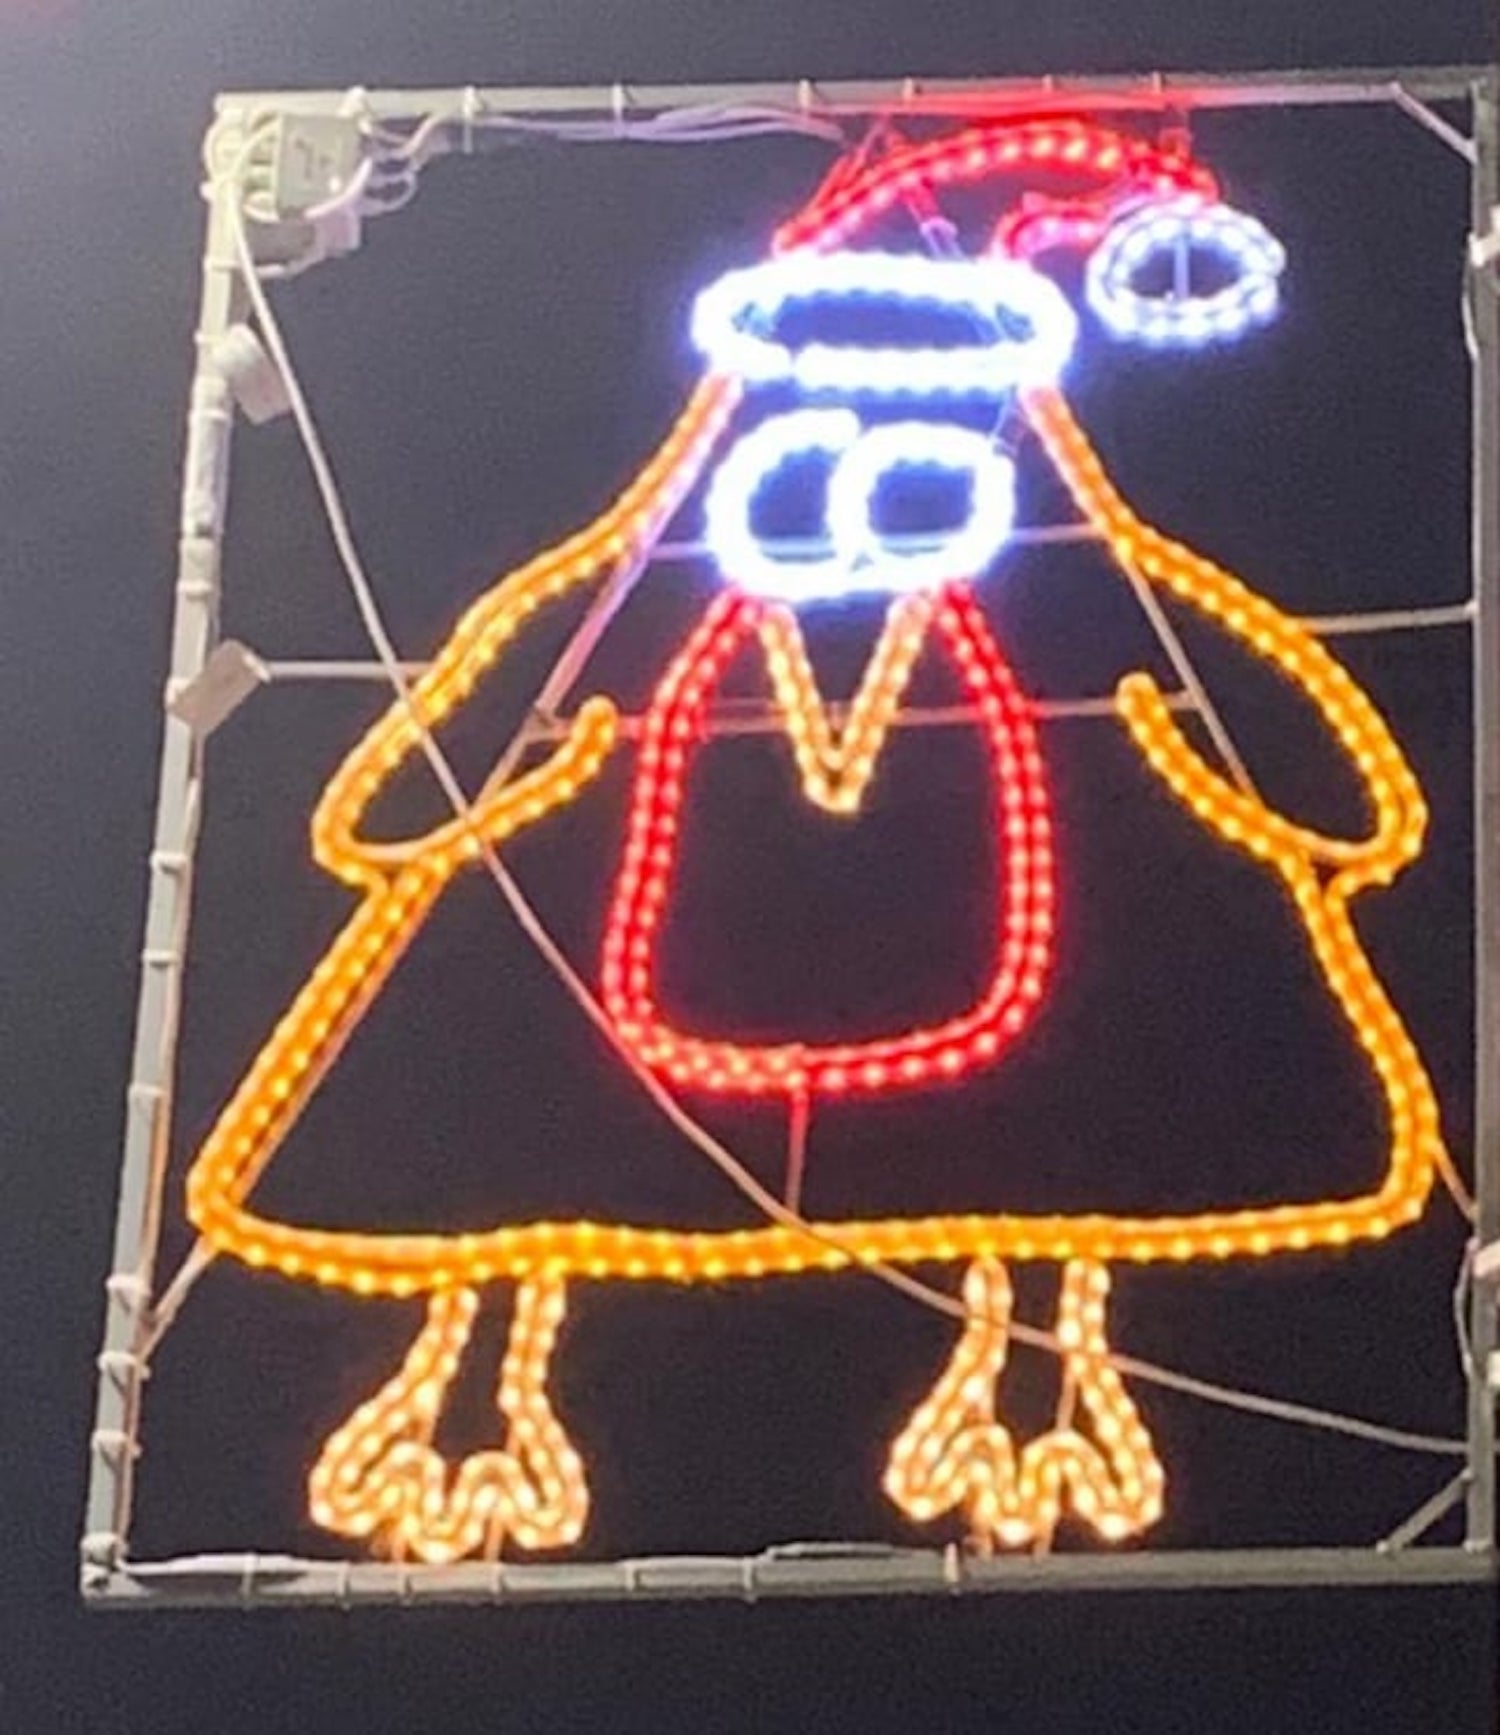 La ville de Newburgh a transformé les dessins des enfants en illuminations de Noël